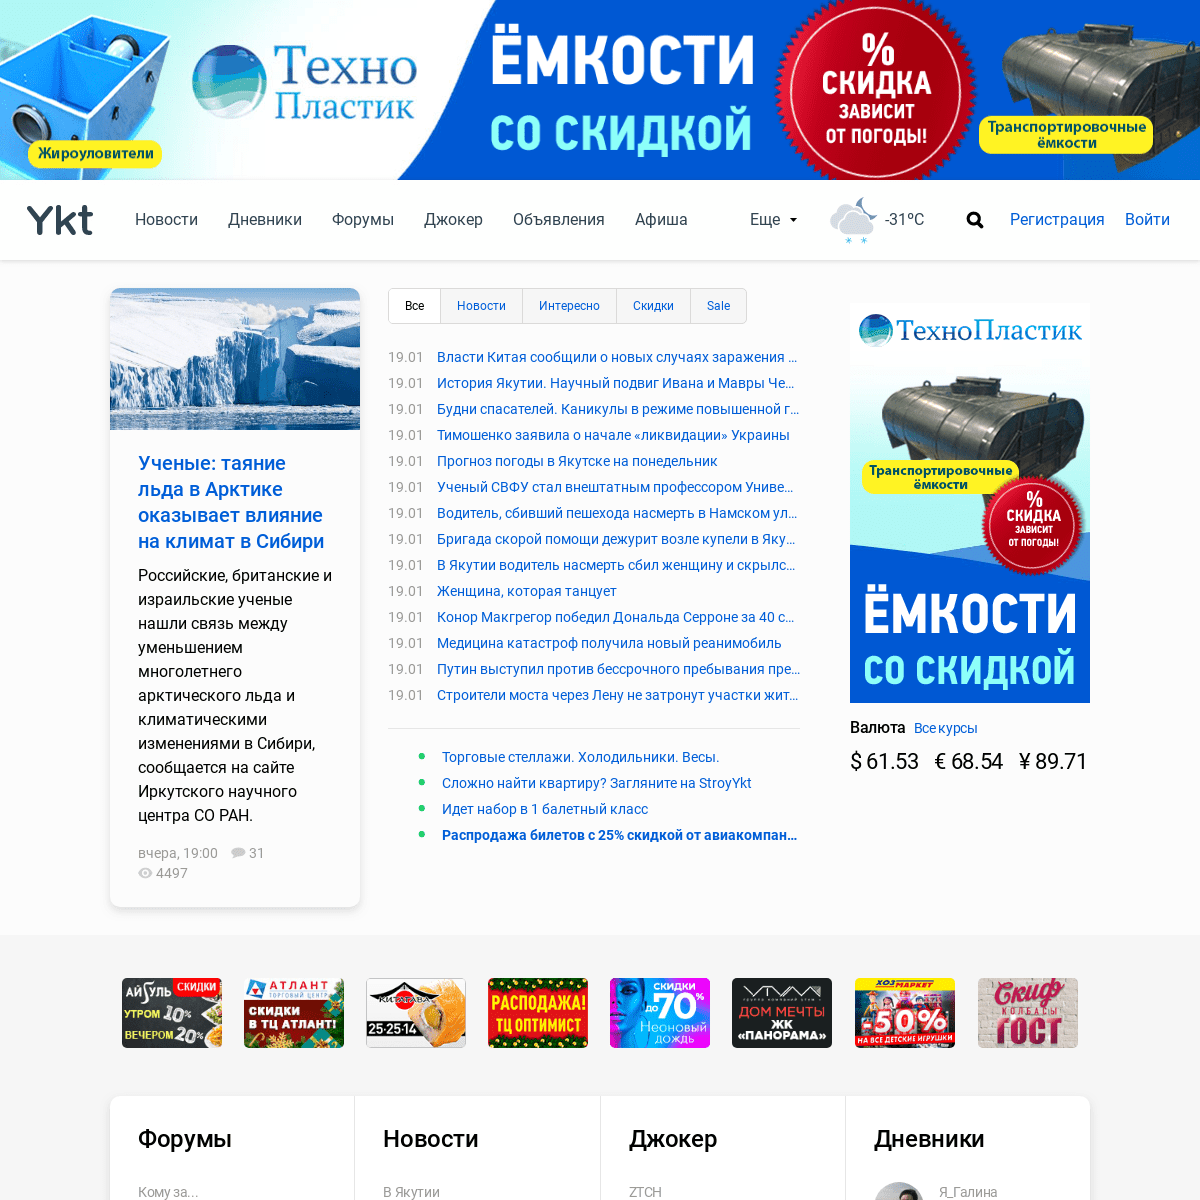 A complete backup of ykt.ru